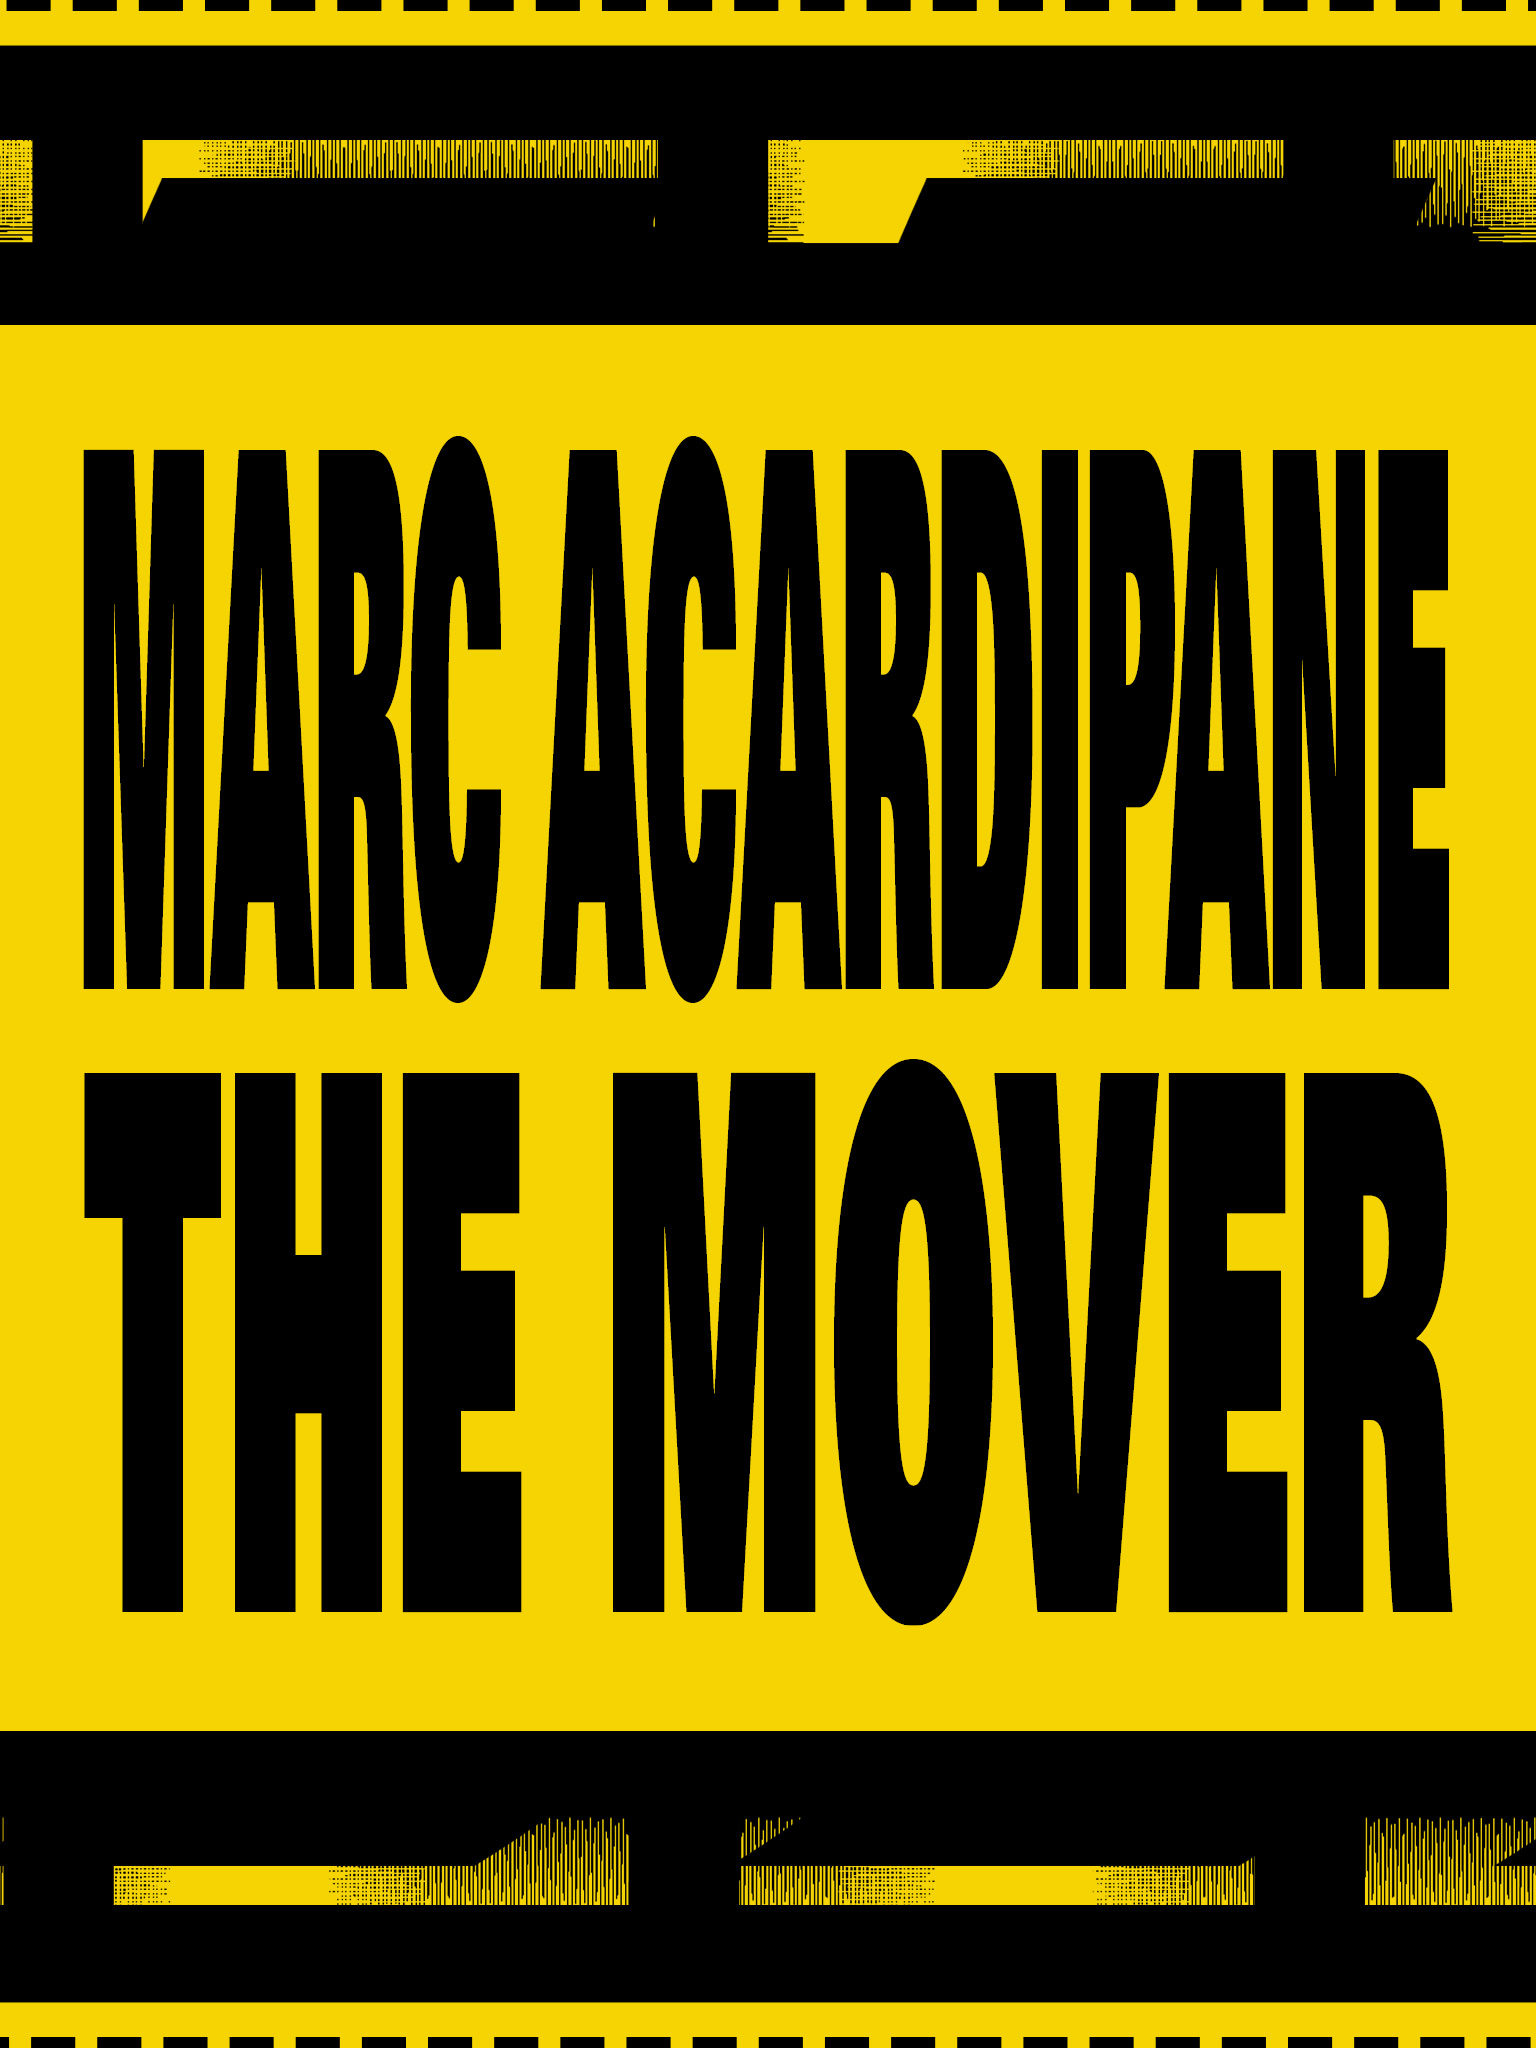 Marc Acardipane: The Mover